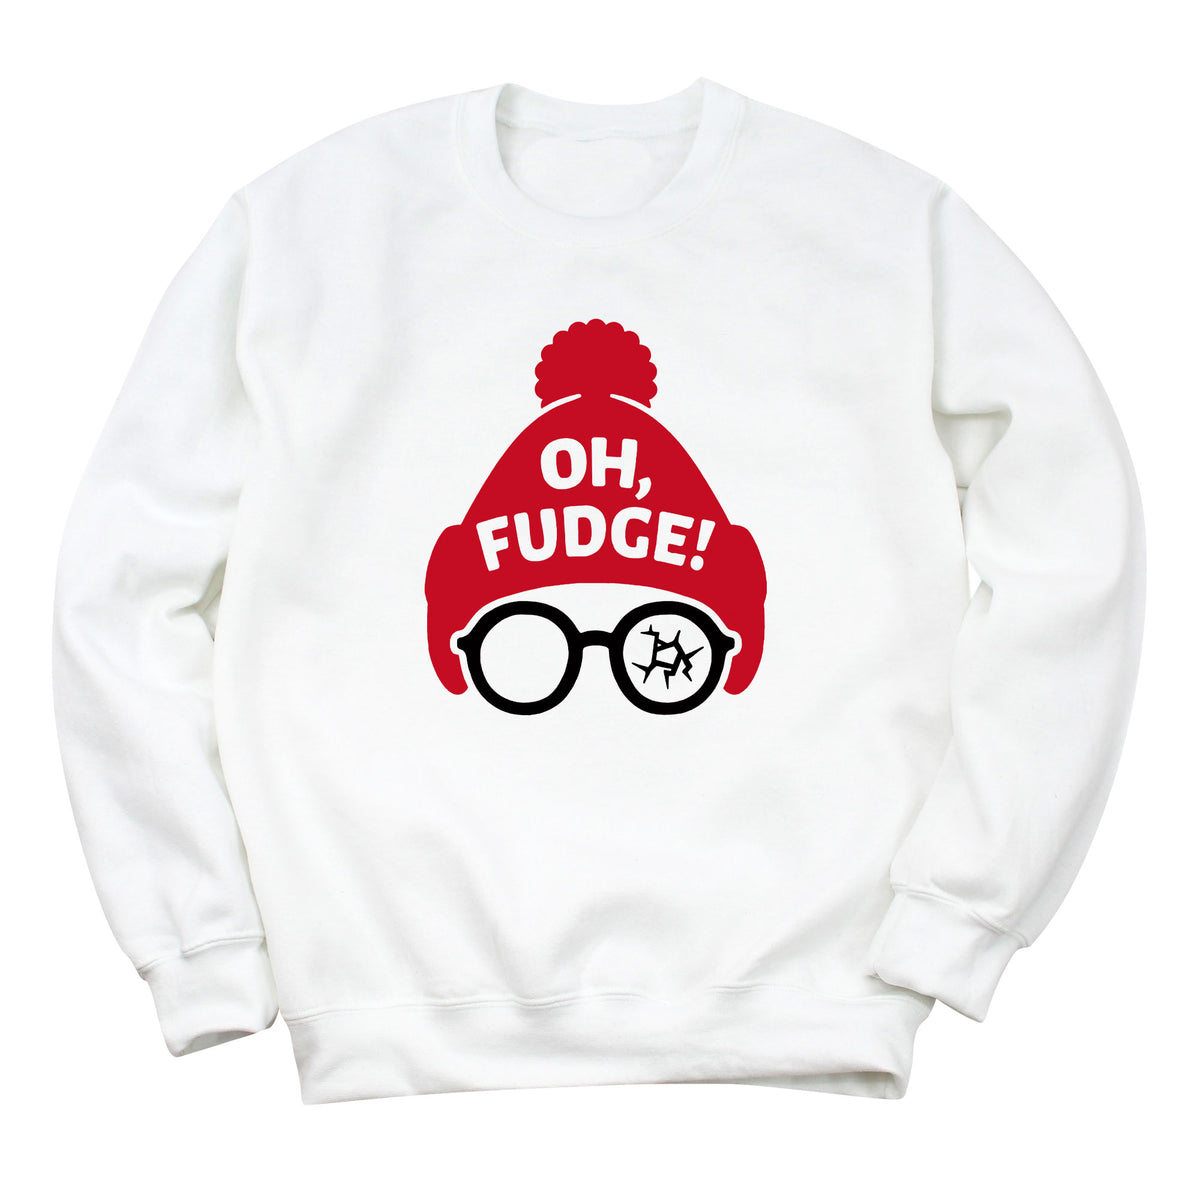 Oh, Fudge! Sweatshirt